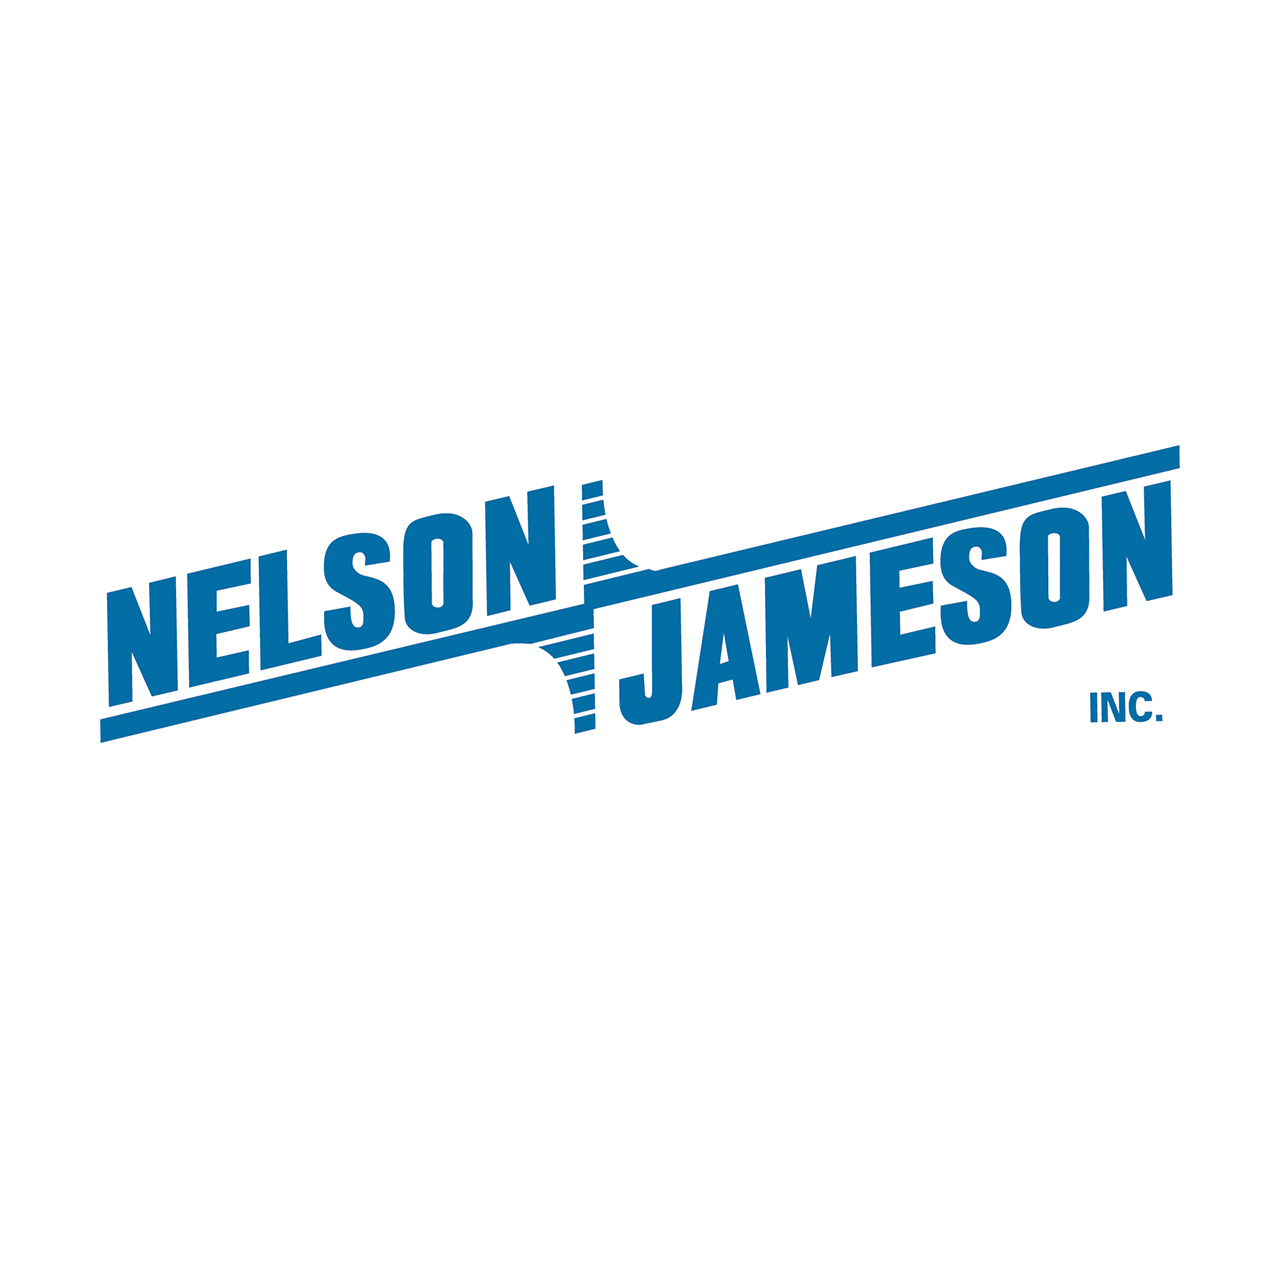 Nelson-Jameson M926 Chloride Analyzer System